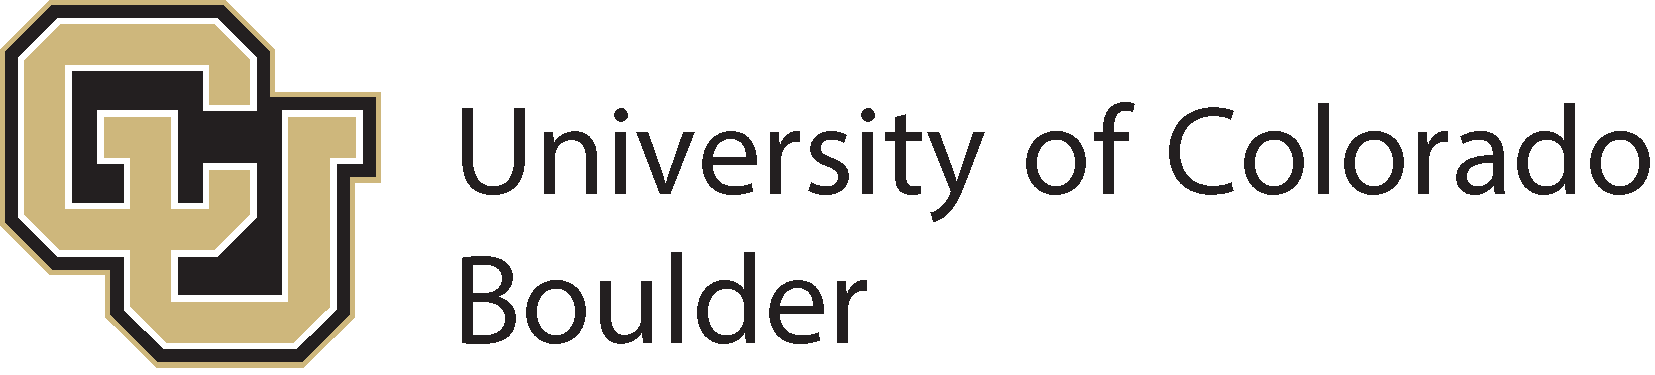 Colorado Boulder Üniversitesi Logosu (CU Boulder) - SVG, PNG, AI, EPS ...